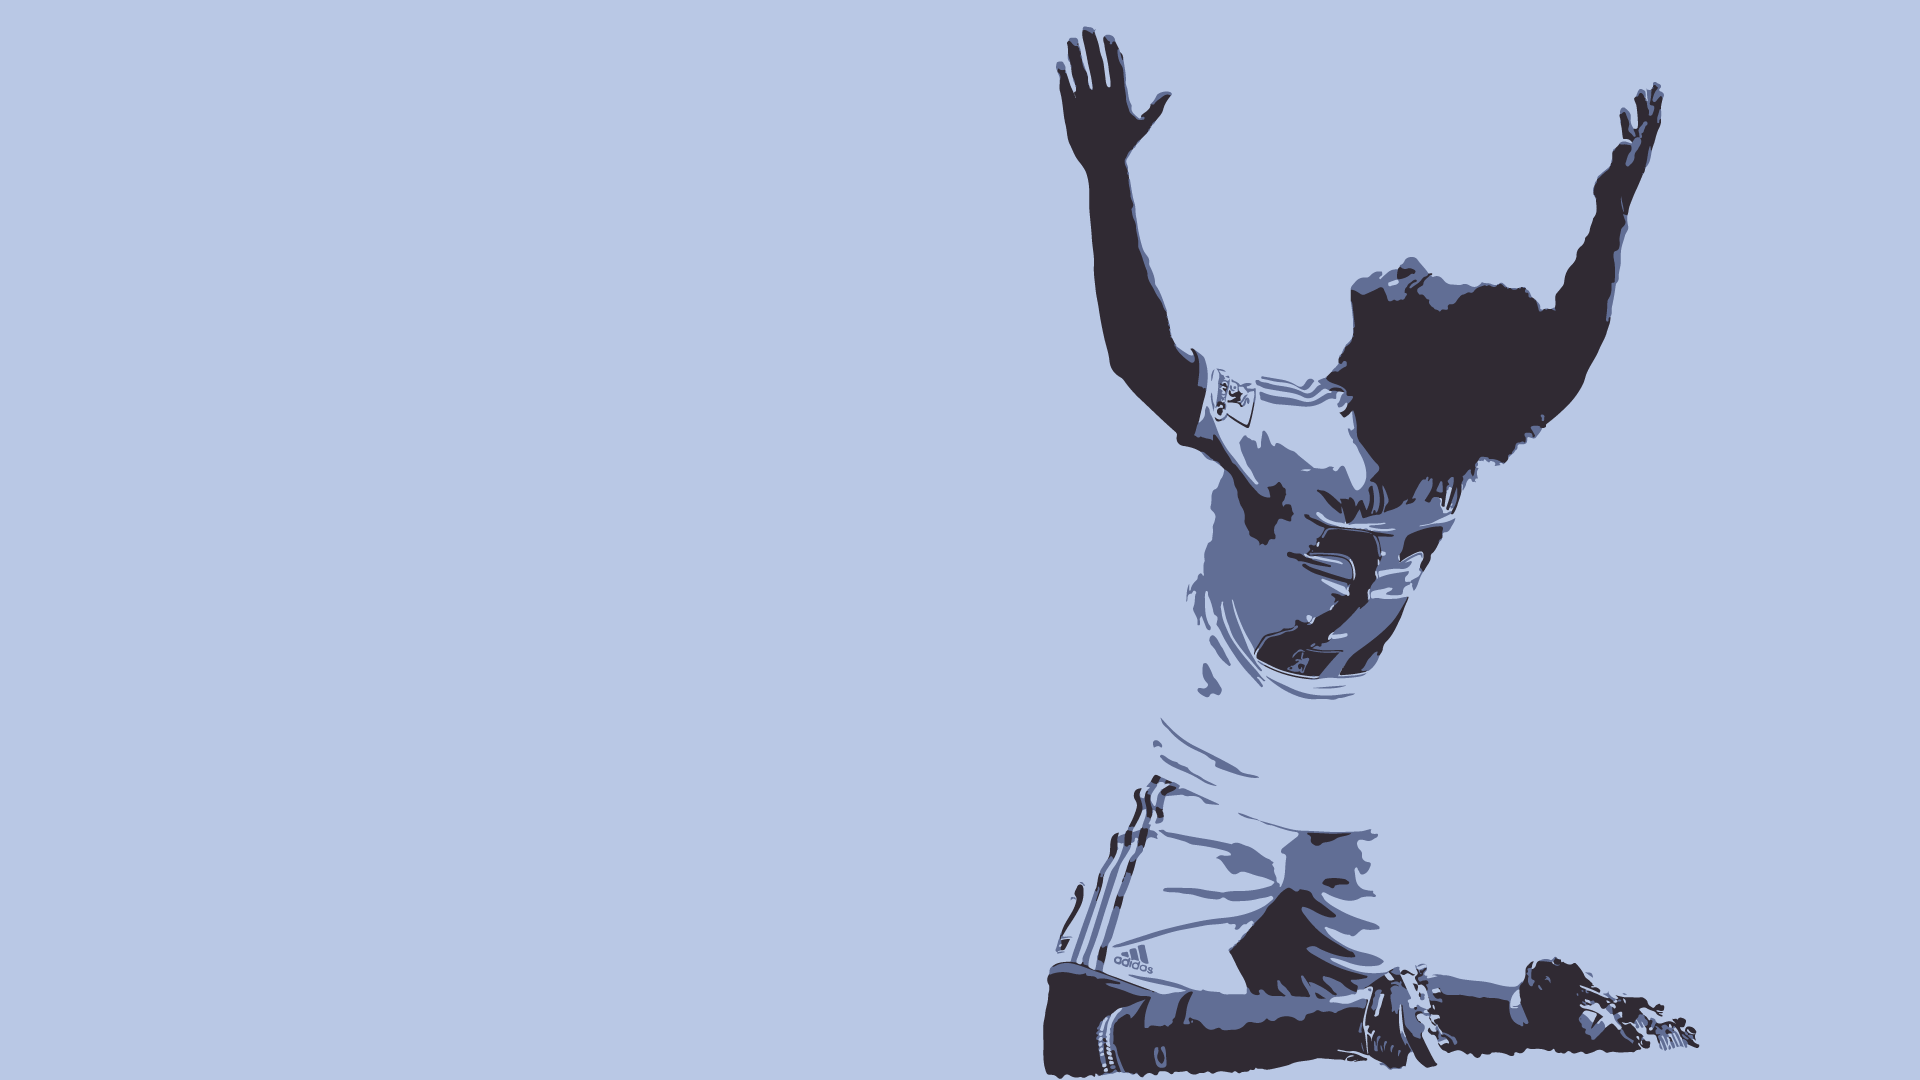 General 1920x1080 Chelsea FC soccer digital art arms up minimalism men sport artwork simple background